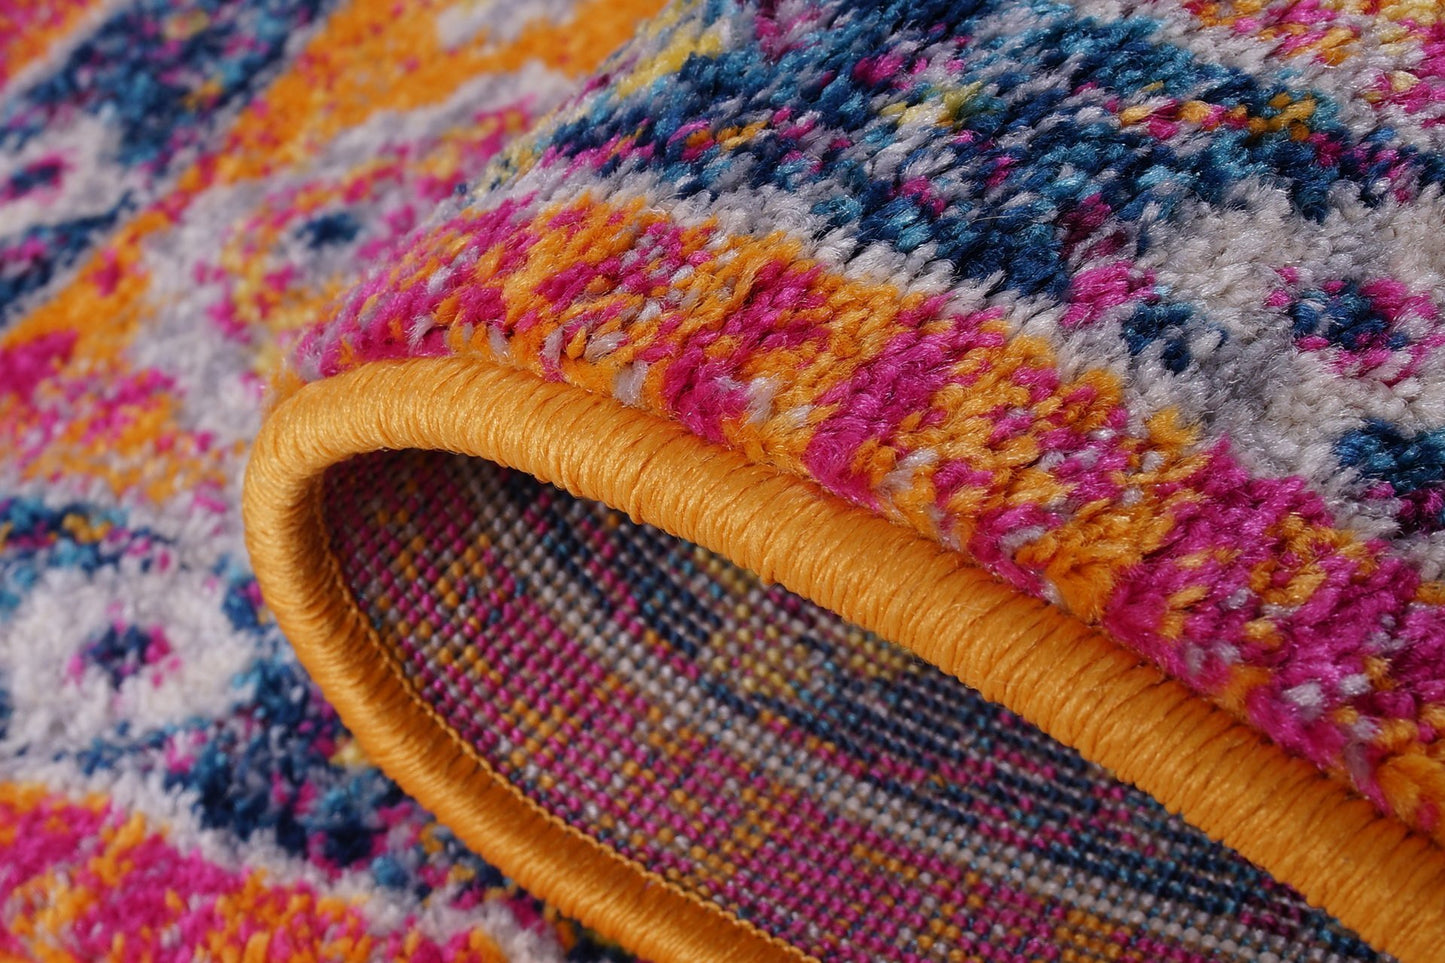 Topaz Traditional Design Innovative Comfortable European Mat Carpet in Orange Pink